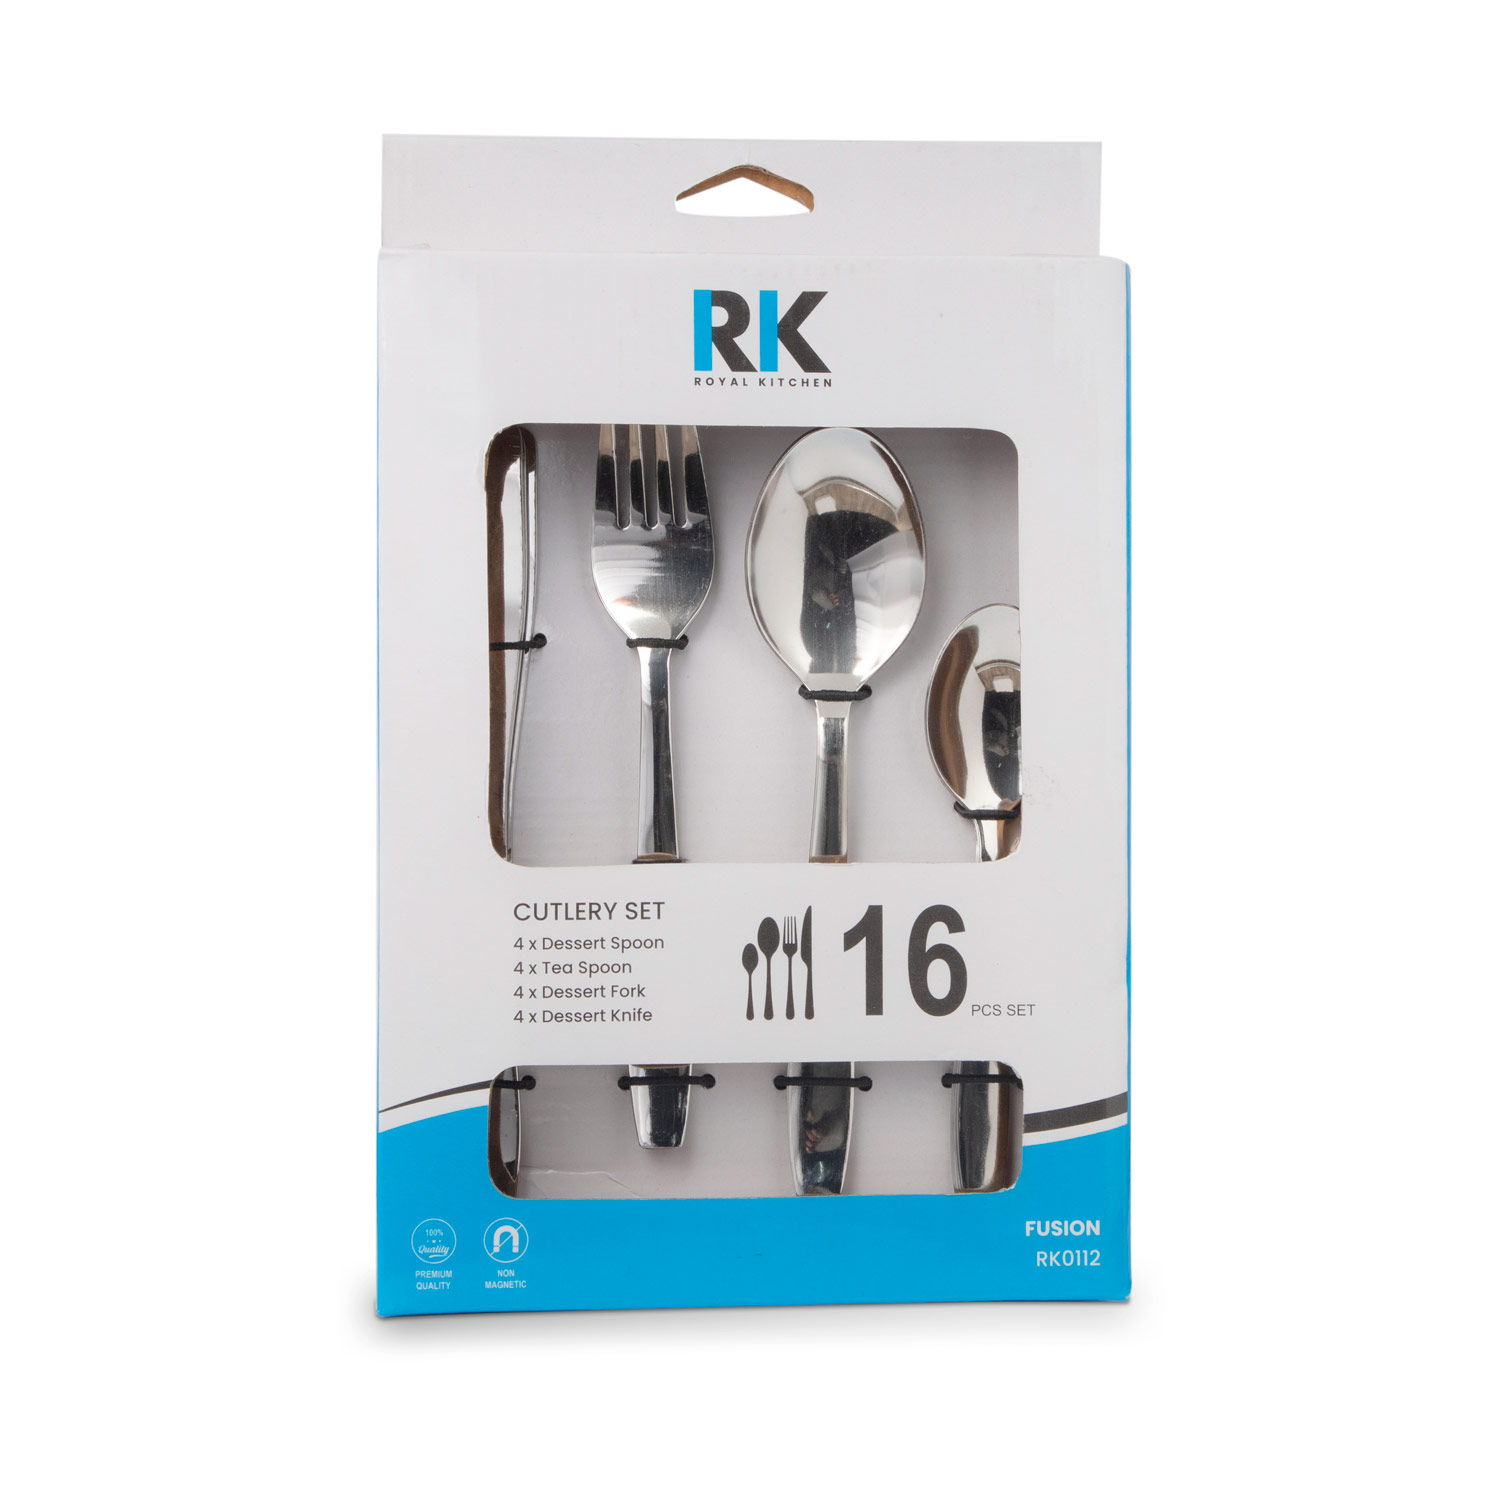 Rk S/S Cutlery Set 16 Pcs